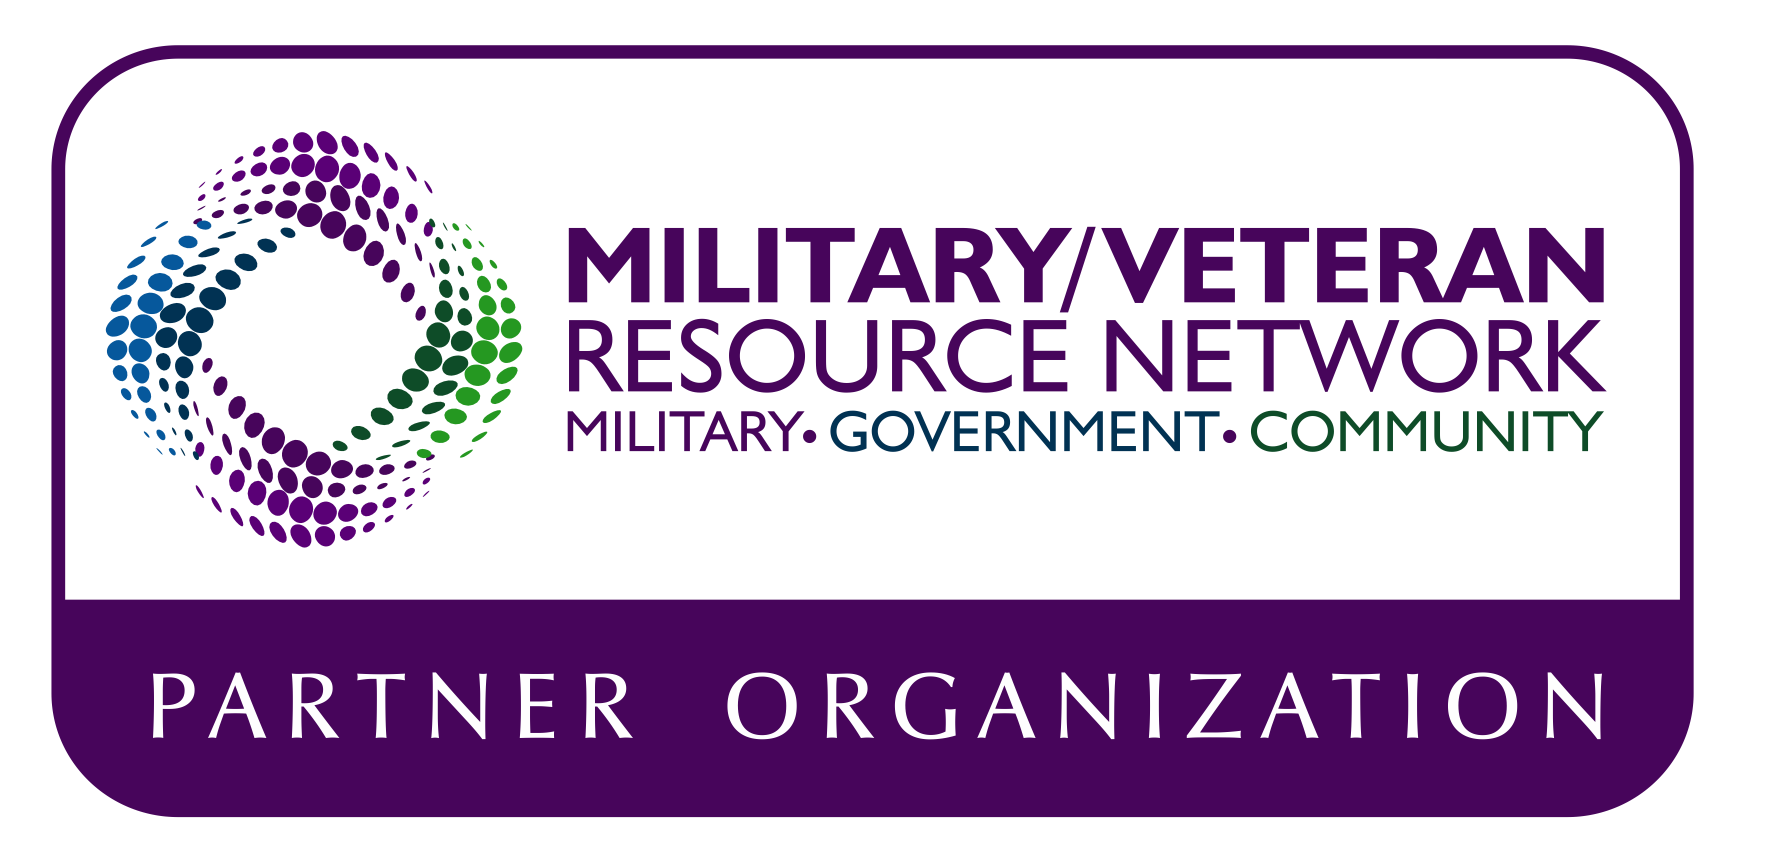 Military/Veteran Resource Network